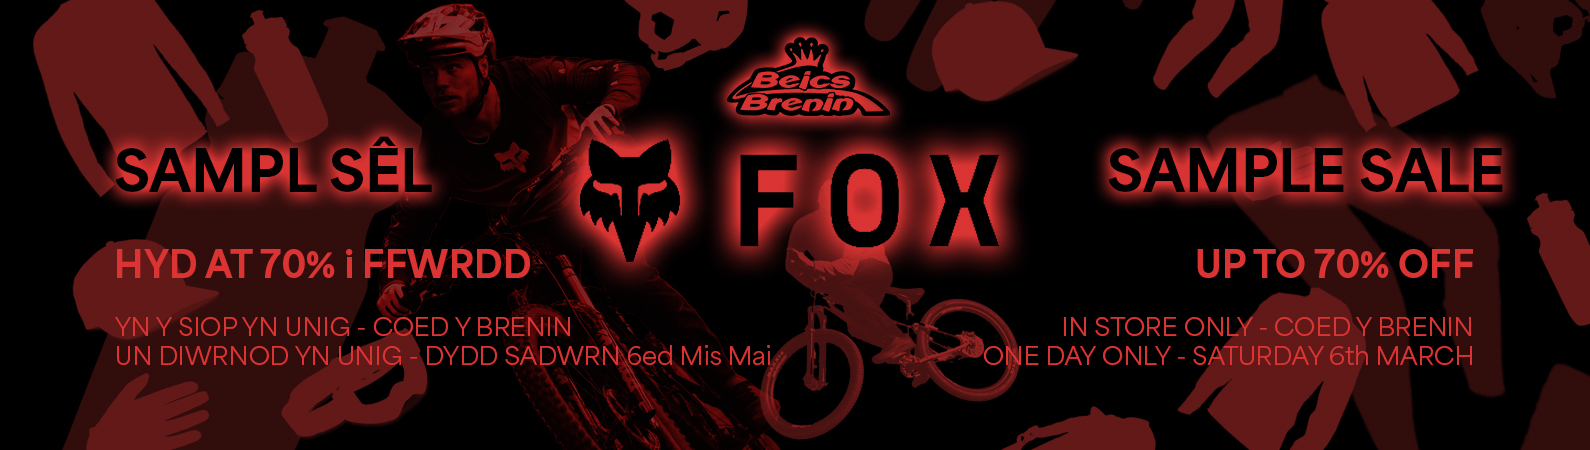 Sampl Sêl Fox | Fox Sample Sale